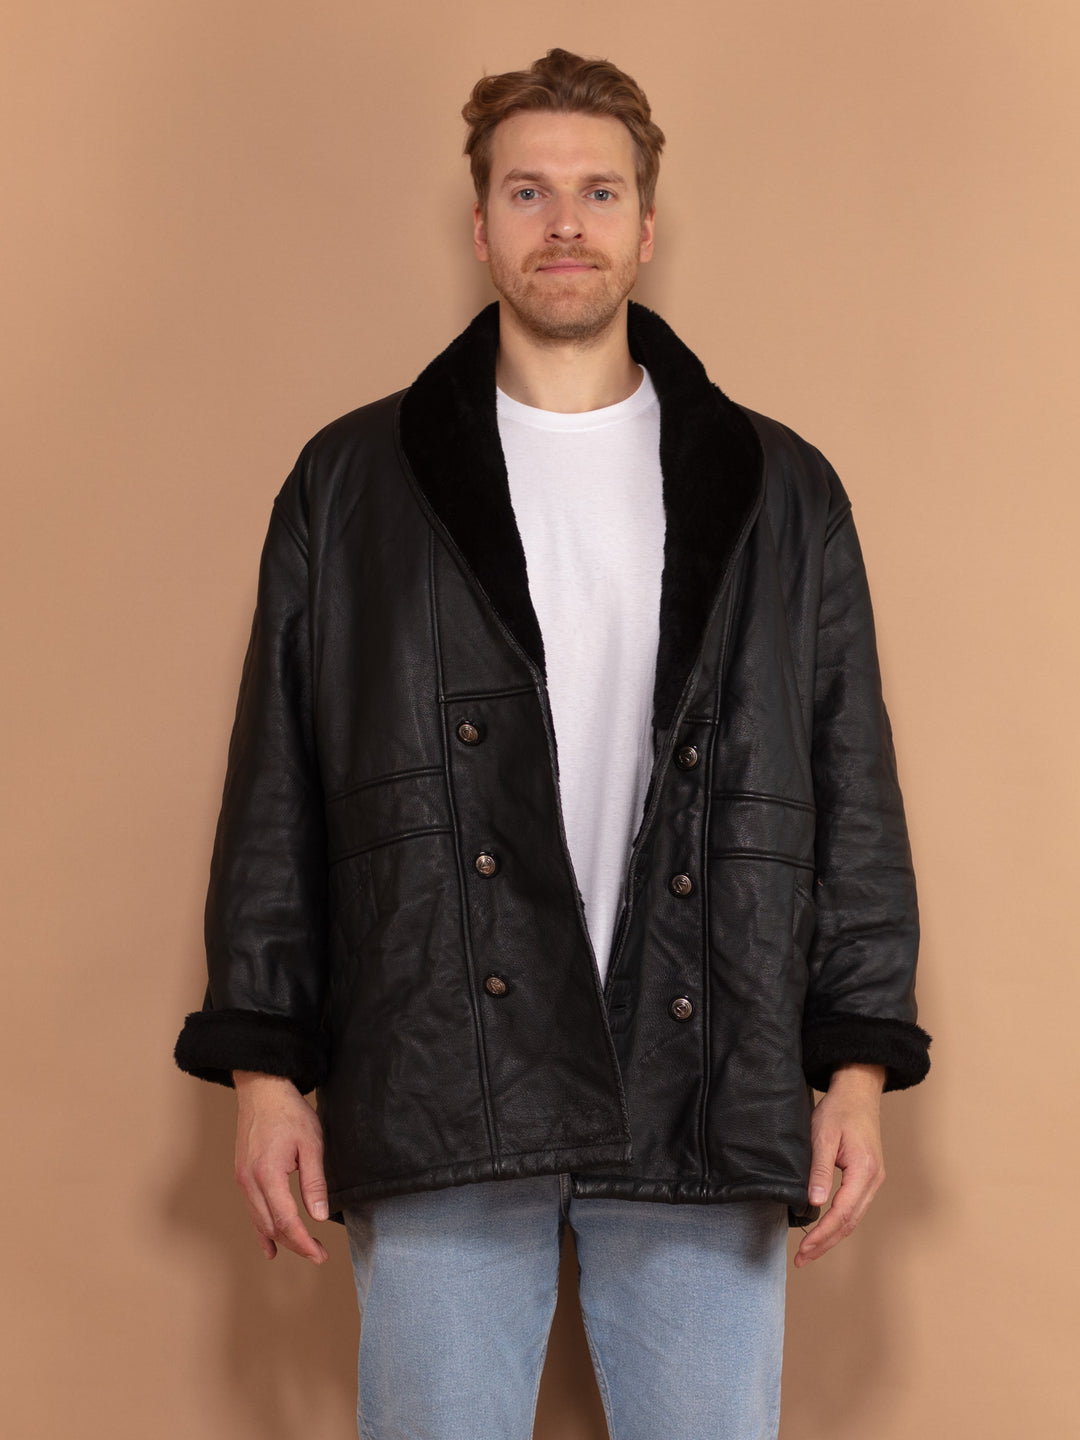 Vintage Leather Sherpa Coat 90s, Size Extra Large, Vintage Men Leather Coat, Boho Style Warm Winter Coat, Black Coat, Gift for Men